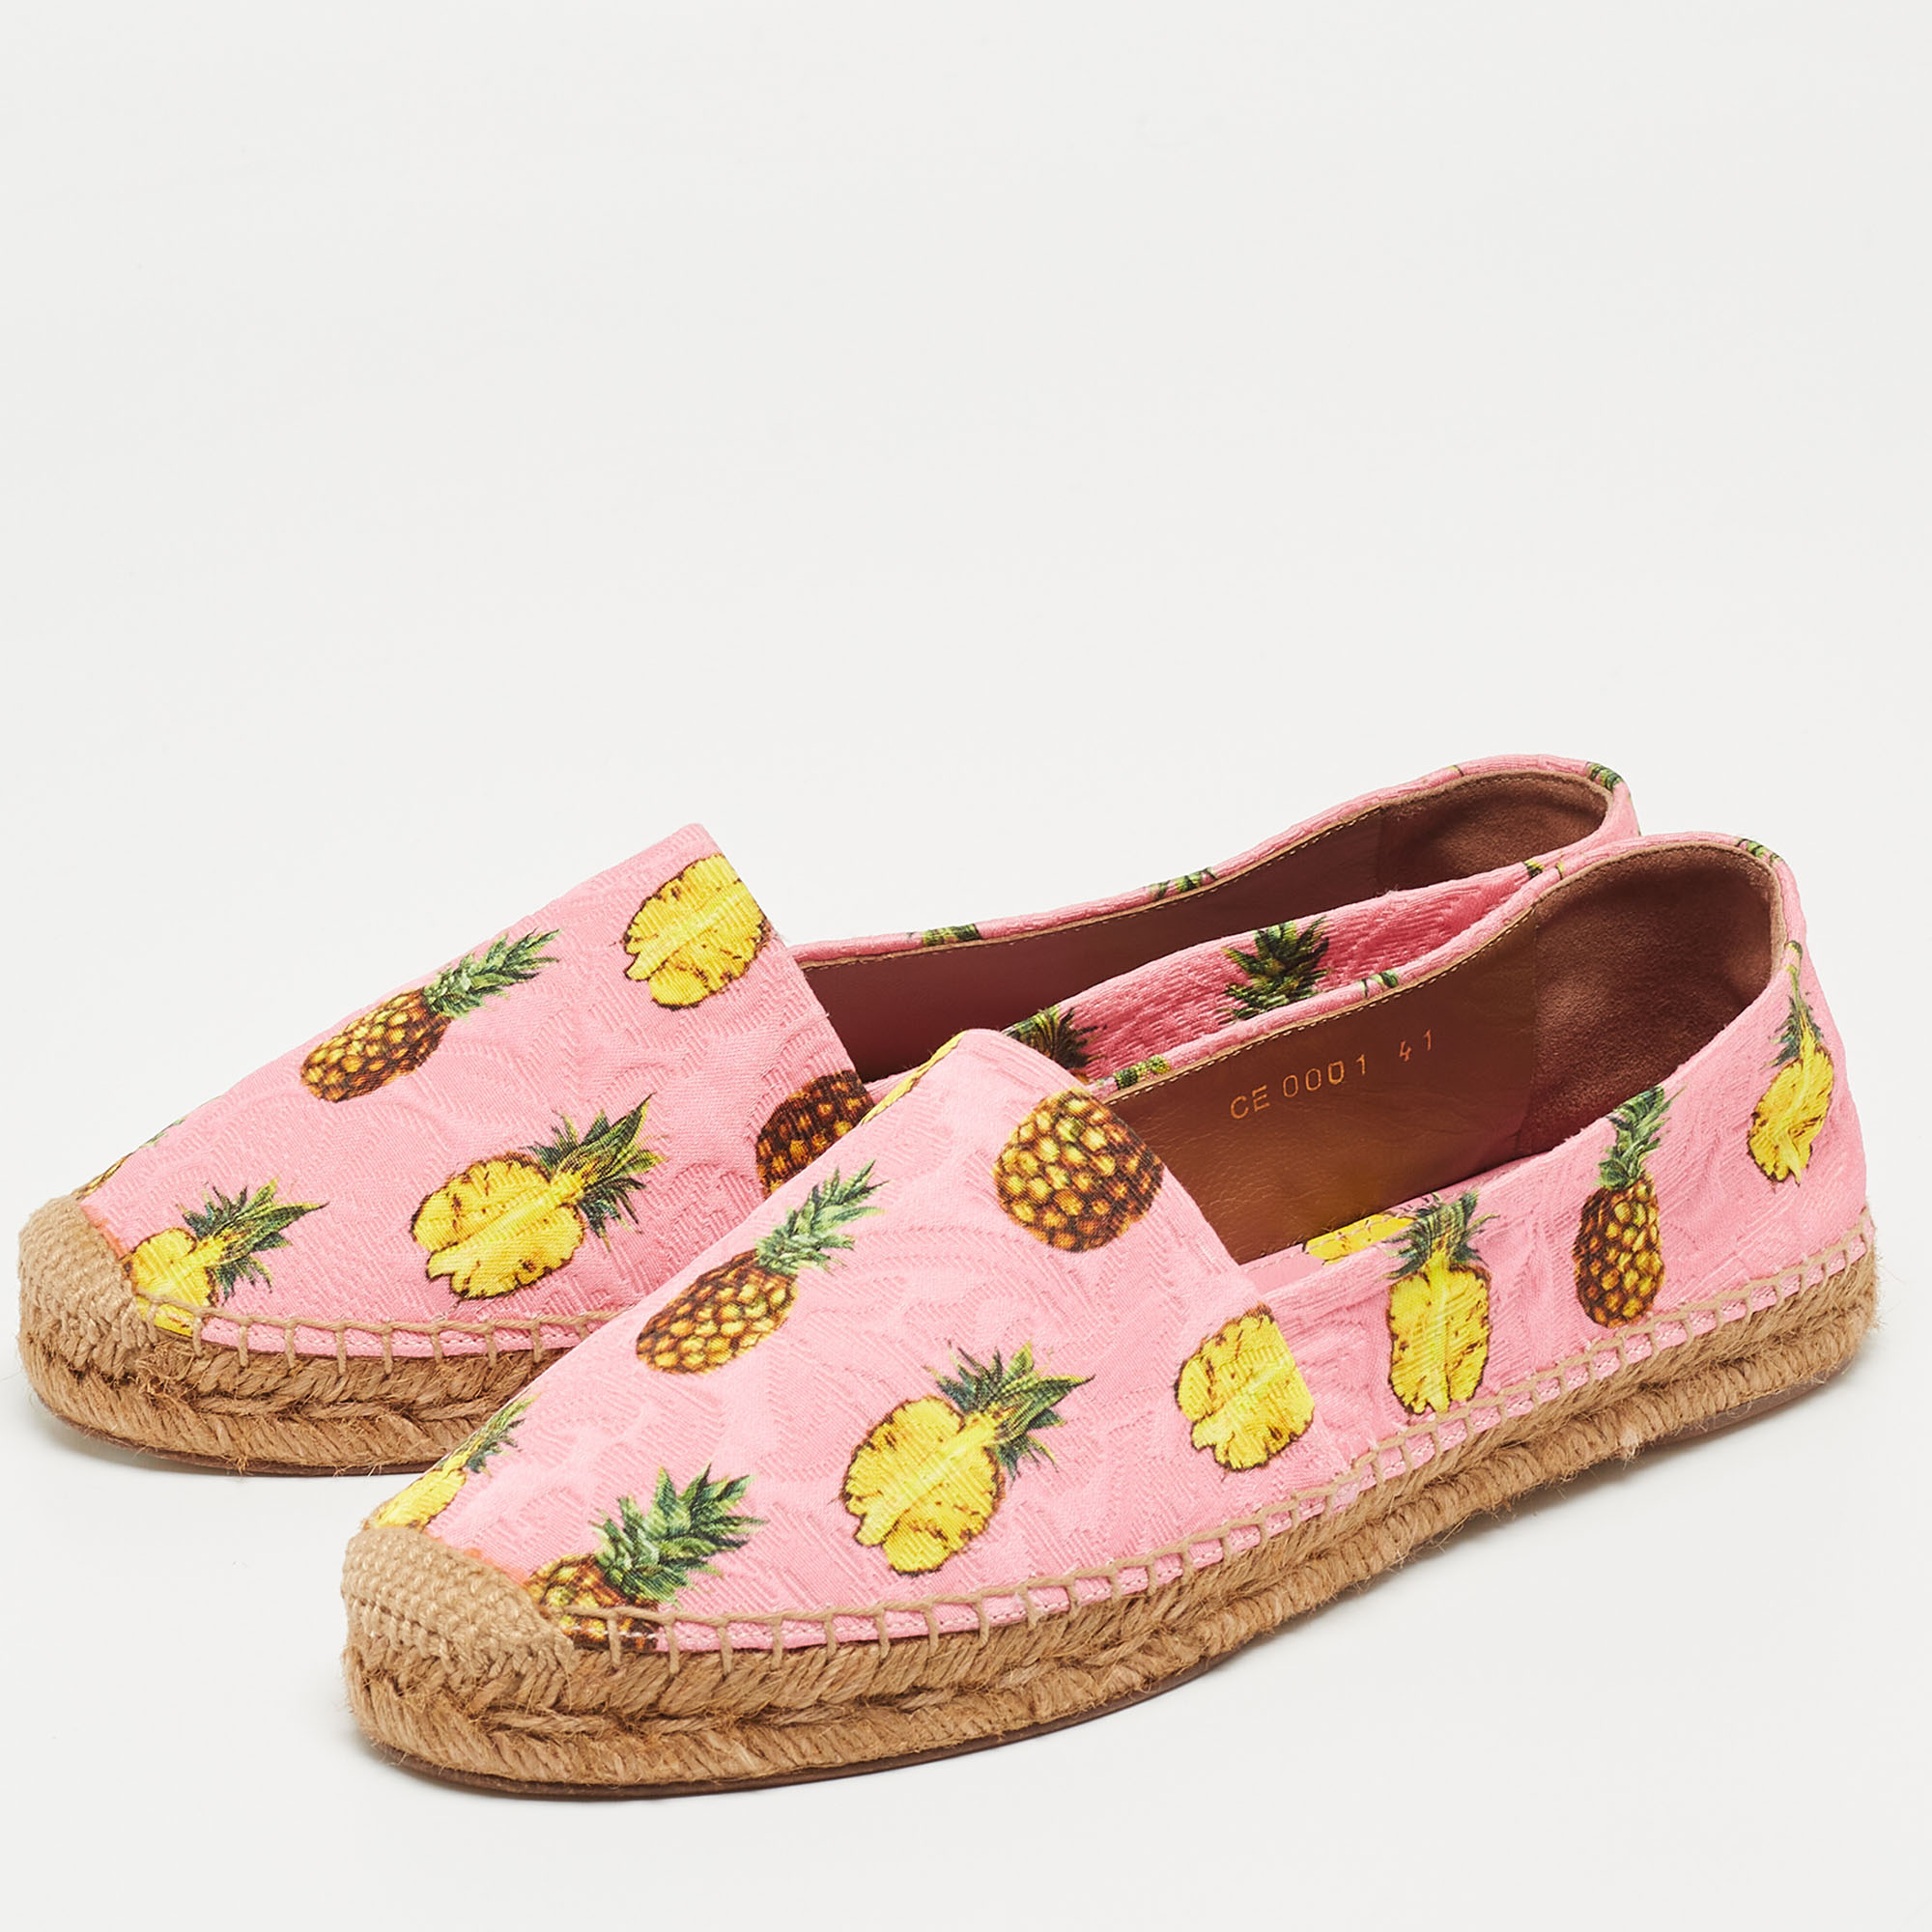 

Dolce & Gabbana Pink/Yellow Pineapple Print Brocade Espadrilles Flats Size